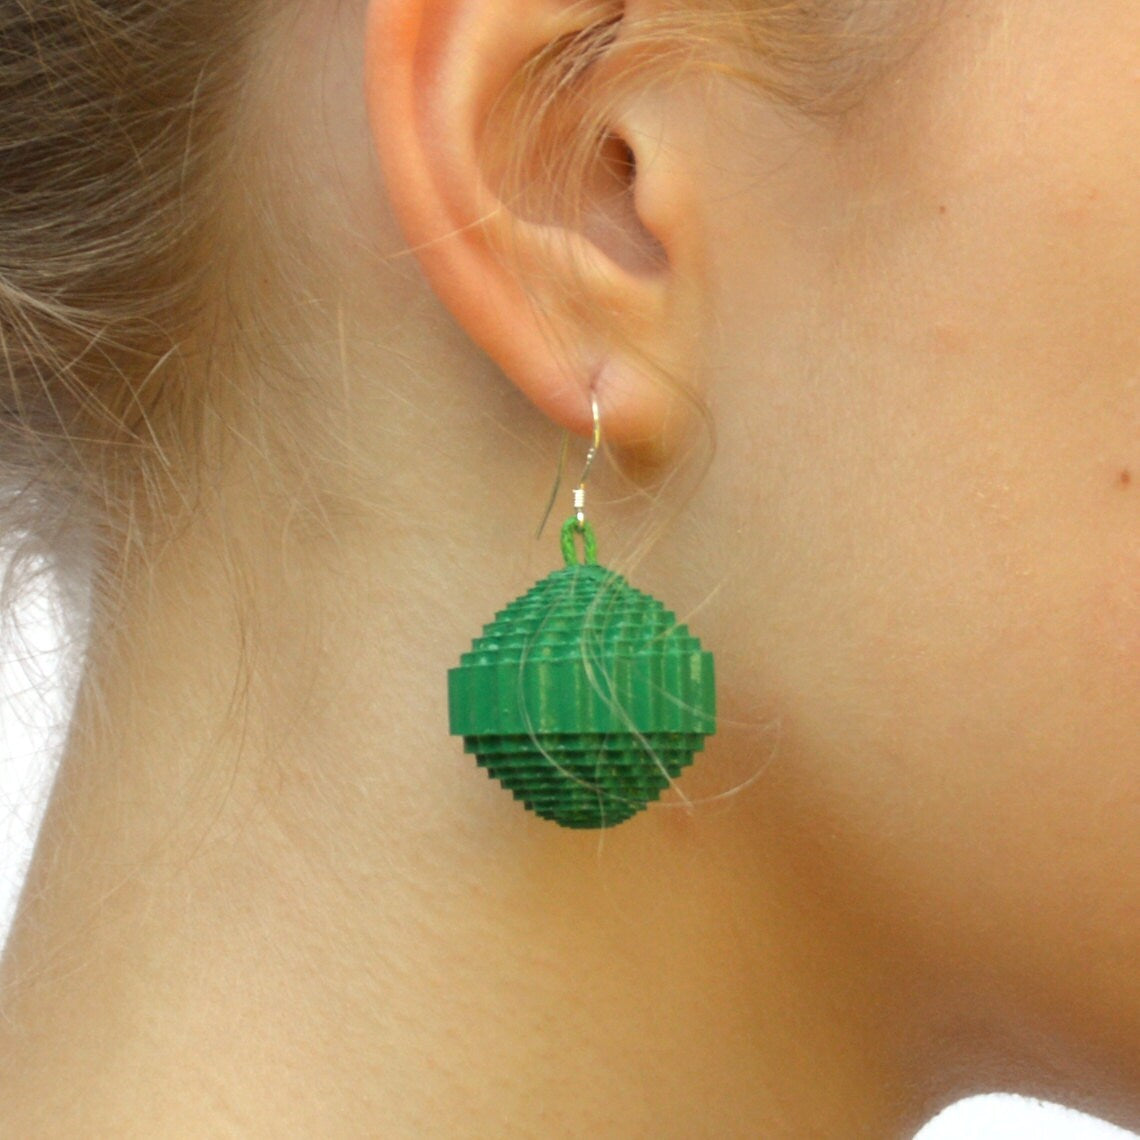 Hay Green: Earrings PALLA - made of corrugated cardboard